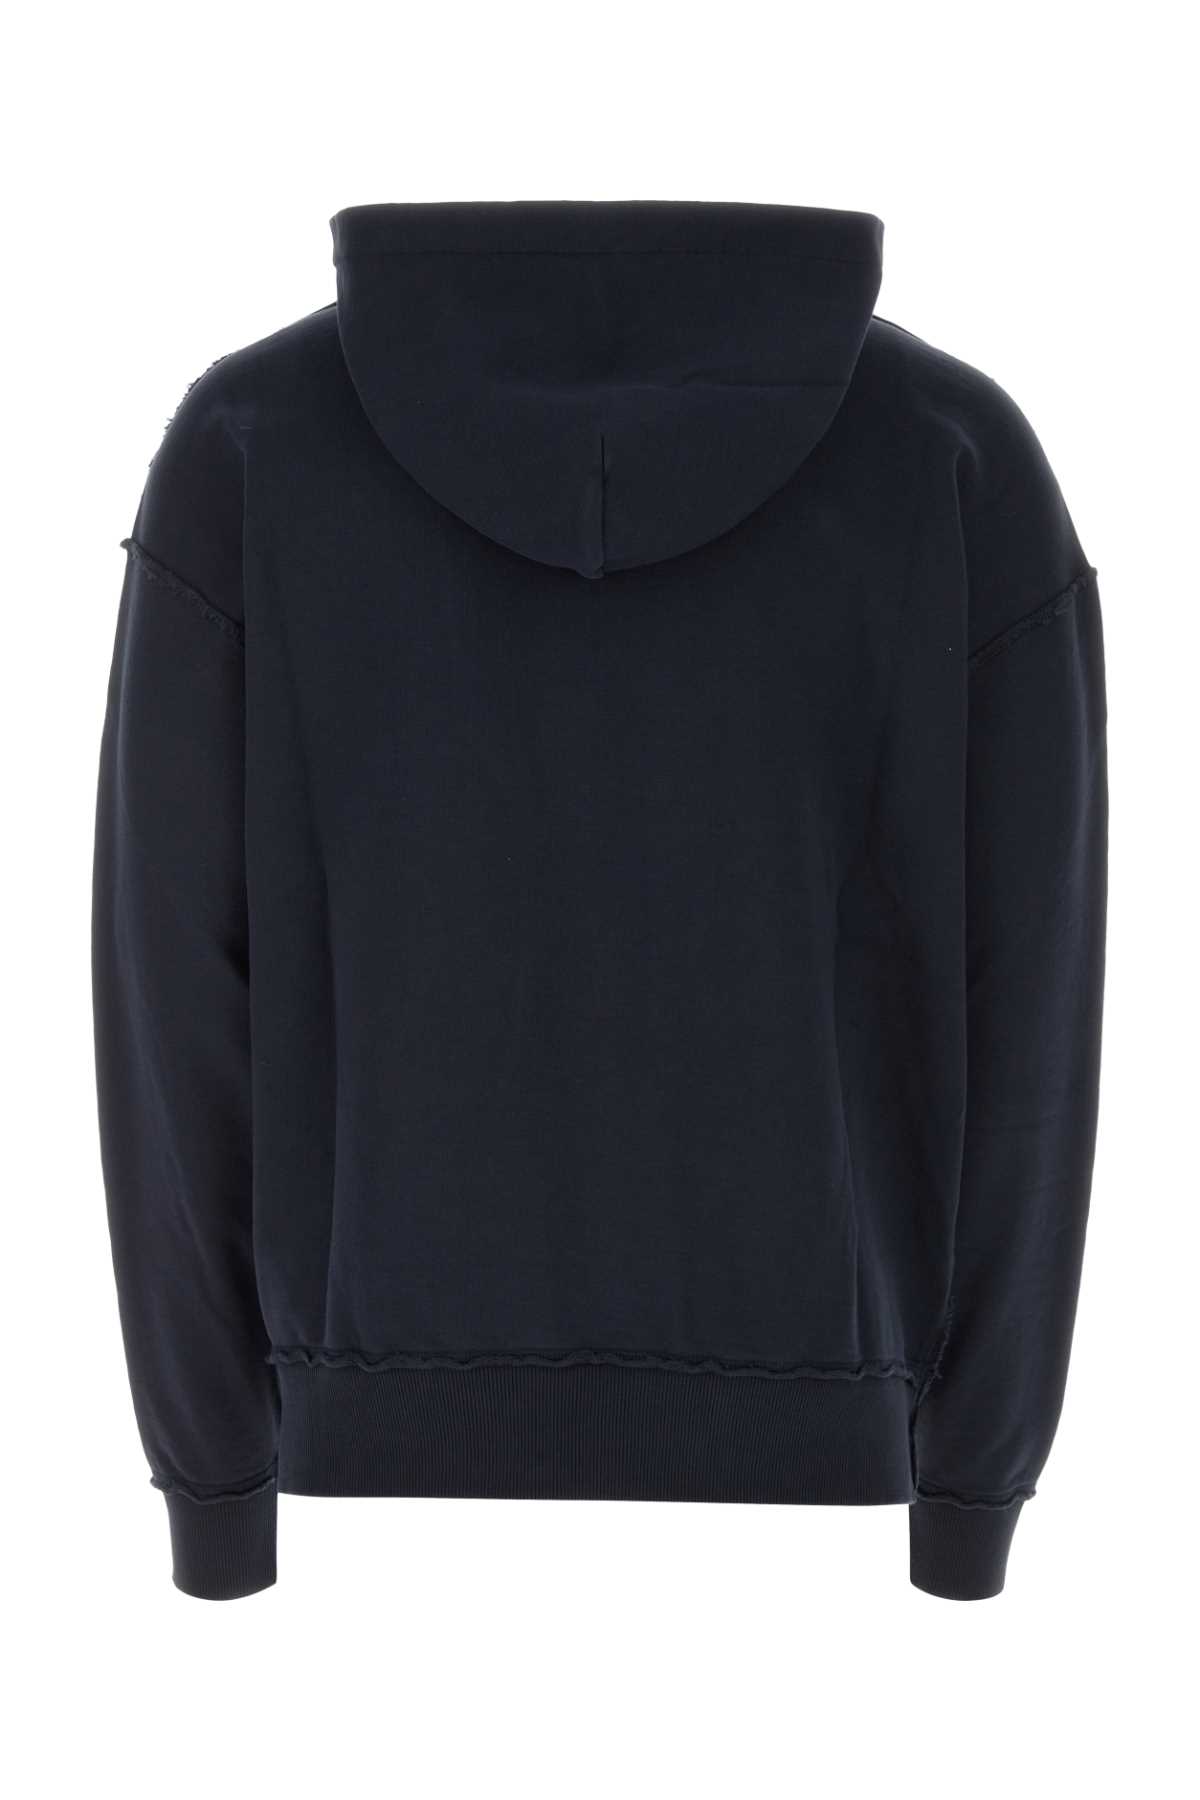 Dolce & Gabbana Black Cotton Sweatshirt In Bluscurissimo1